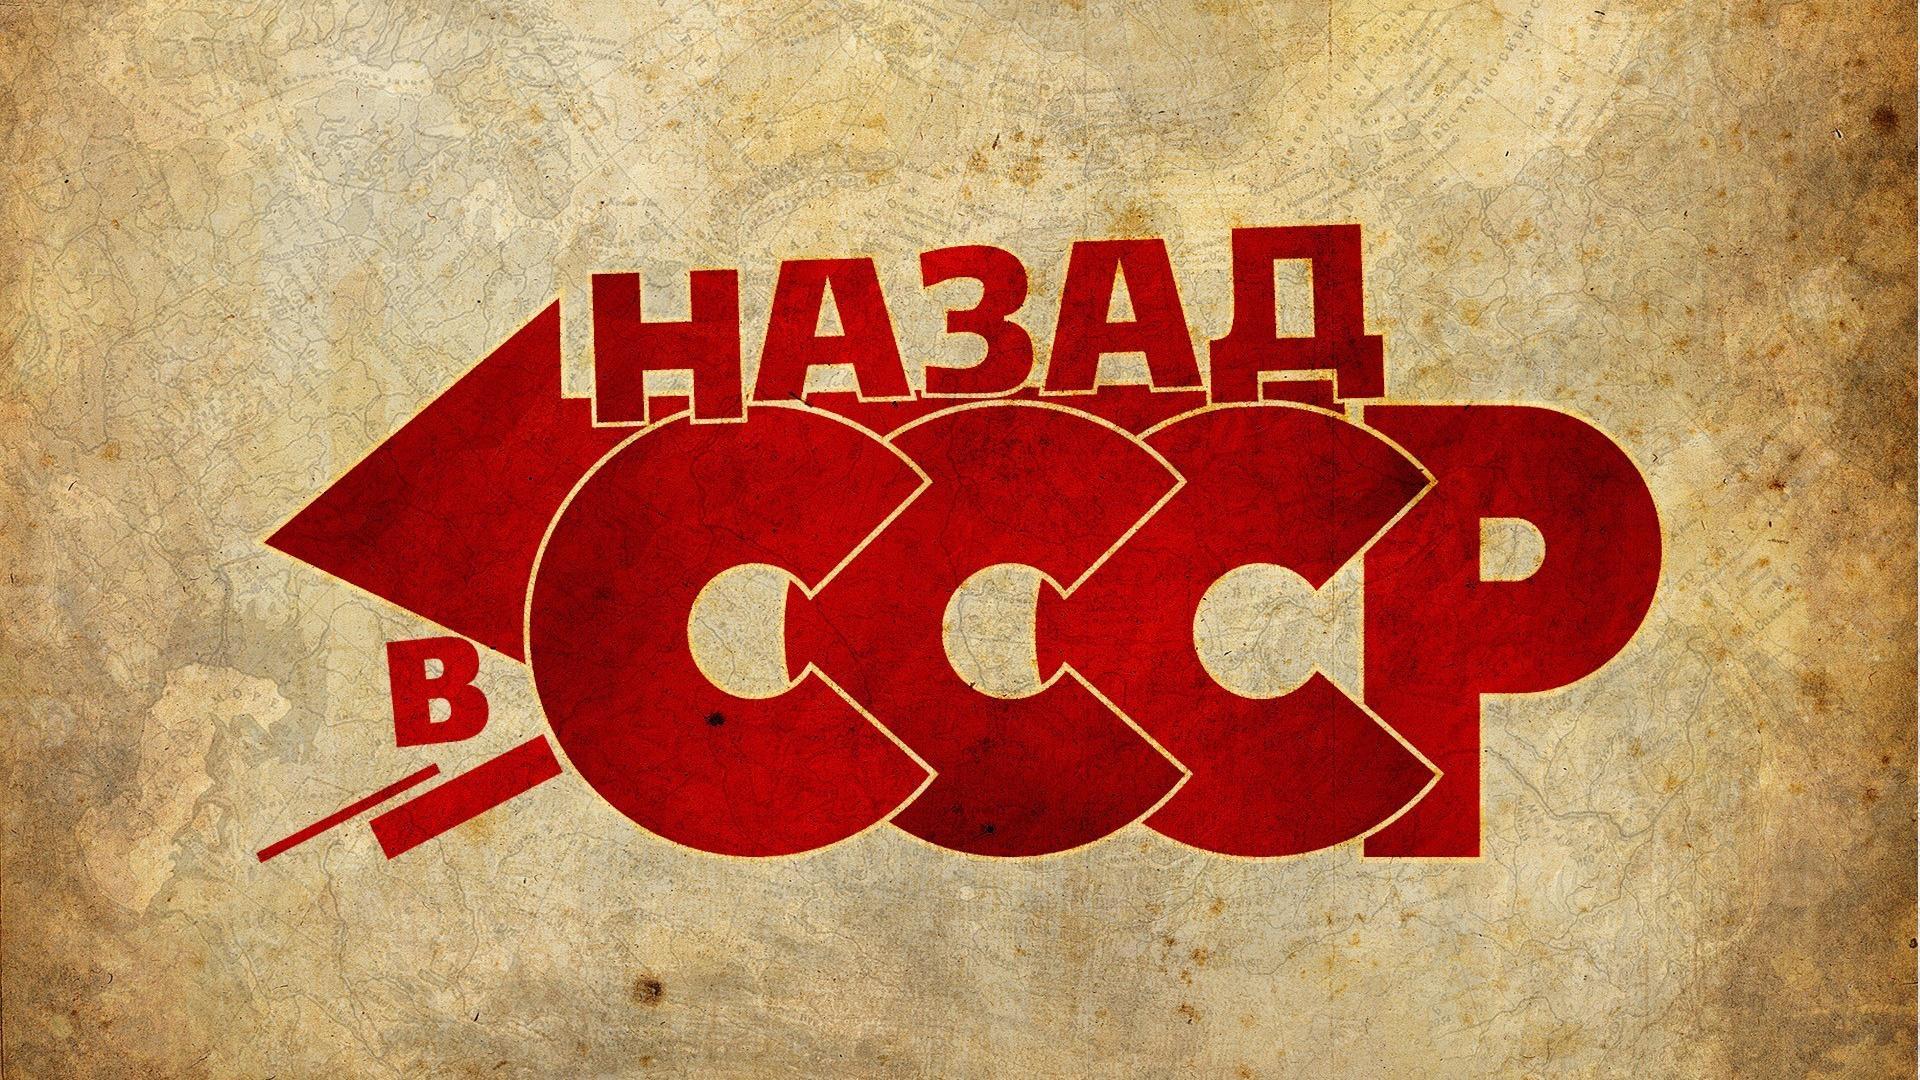 71 Soviet Union Wallpaper  WallpaperSafari